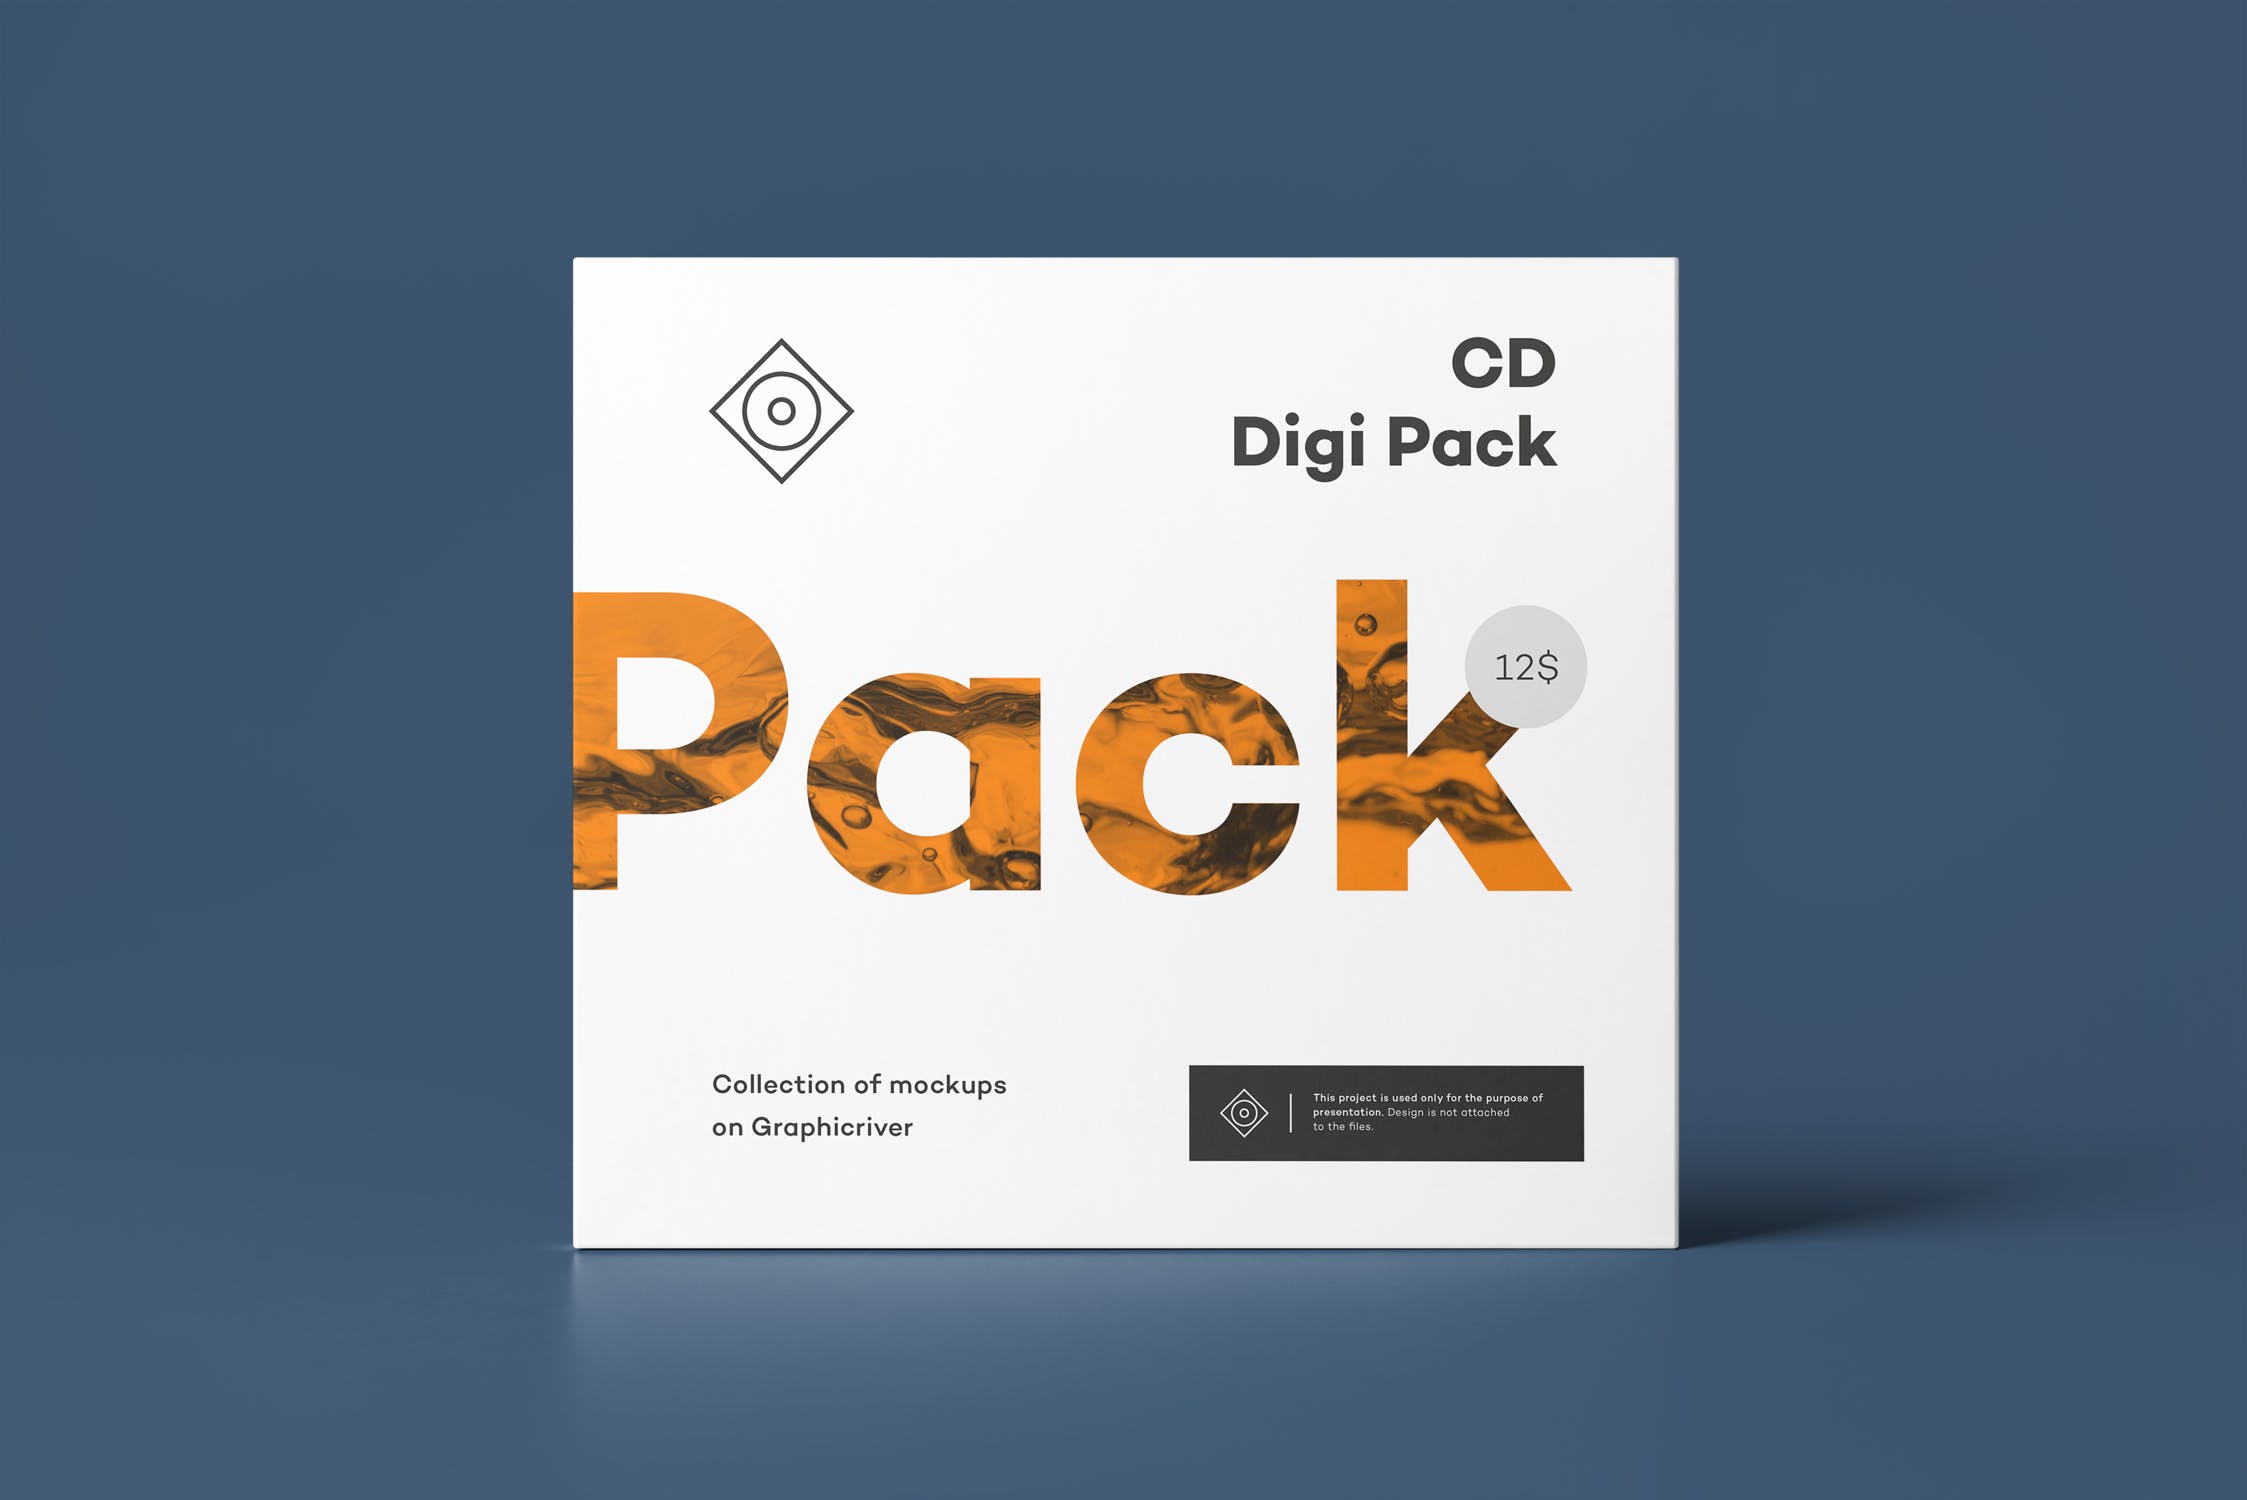 CD光碟封面&包装盒设计图非凡图库精选模板v8 CD Digi Pack Mock-up 8插图(12)